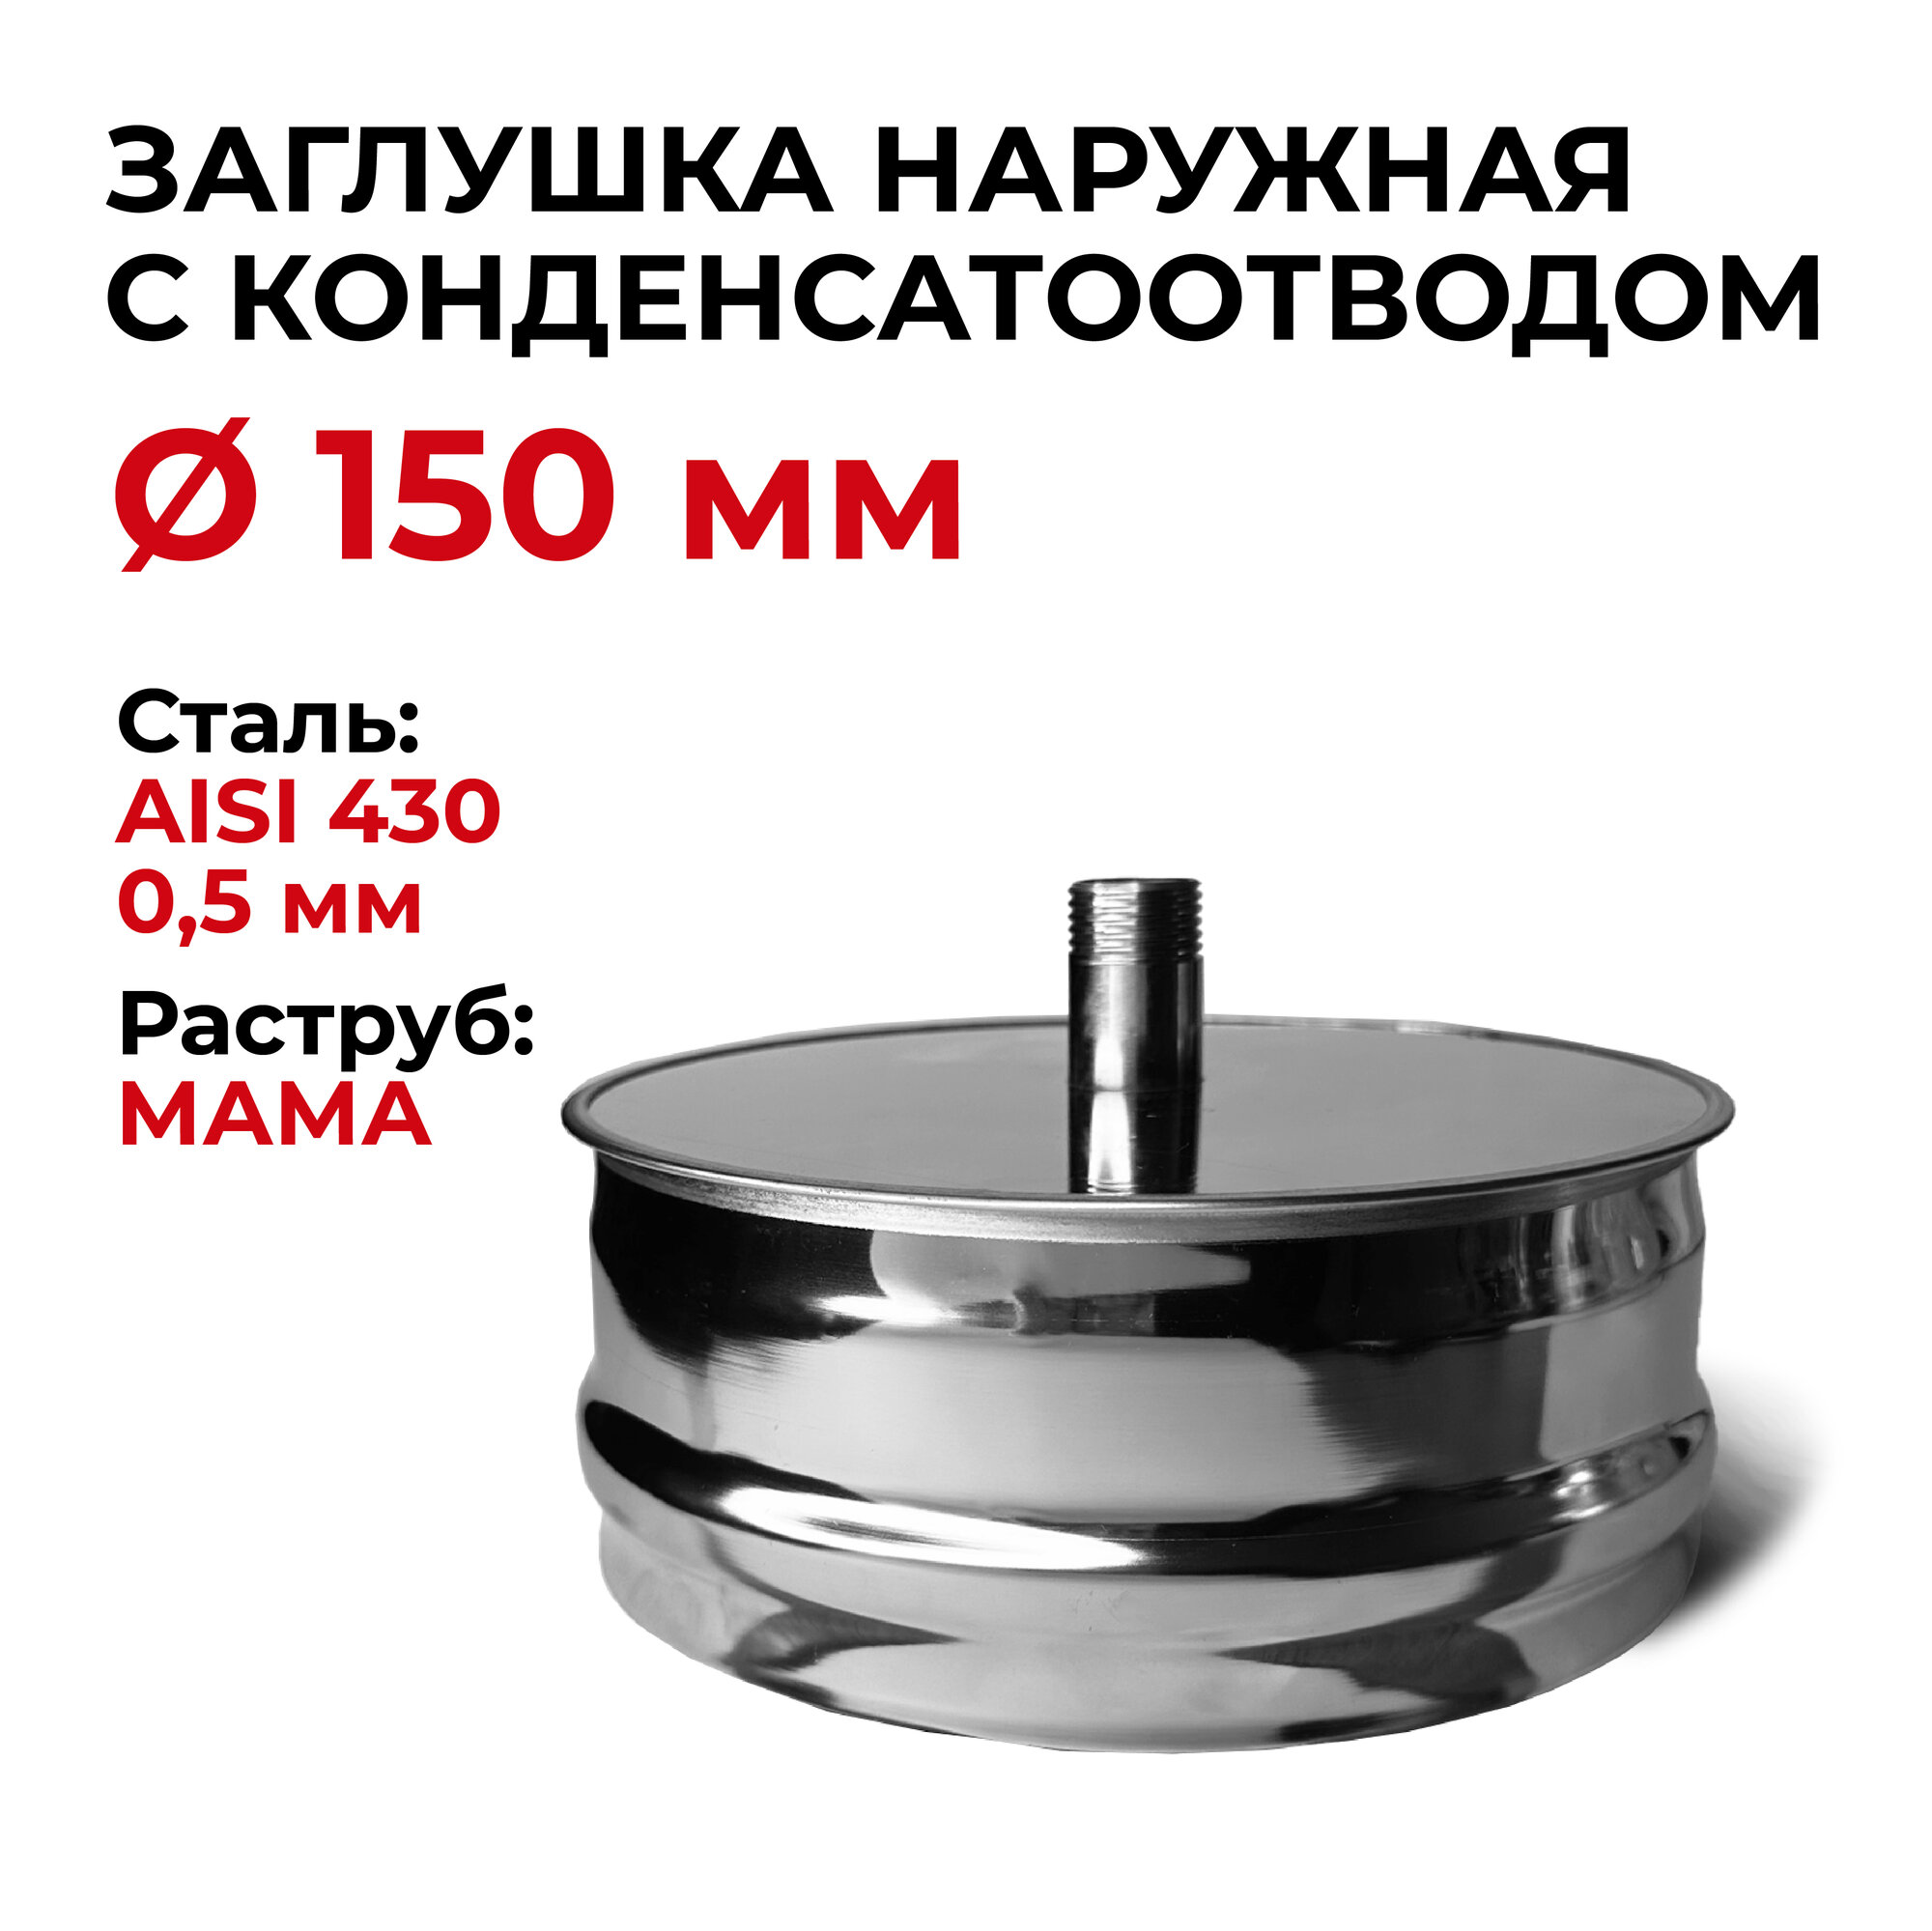 Заглушка с конденсатоотводом 1/2 наружная мама D 150 мм 